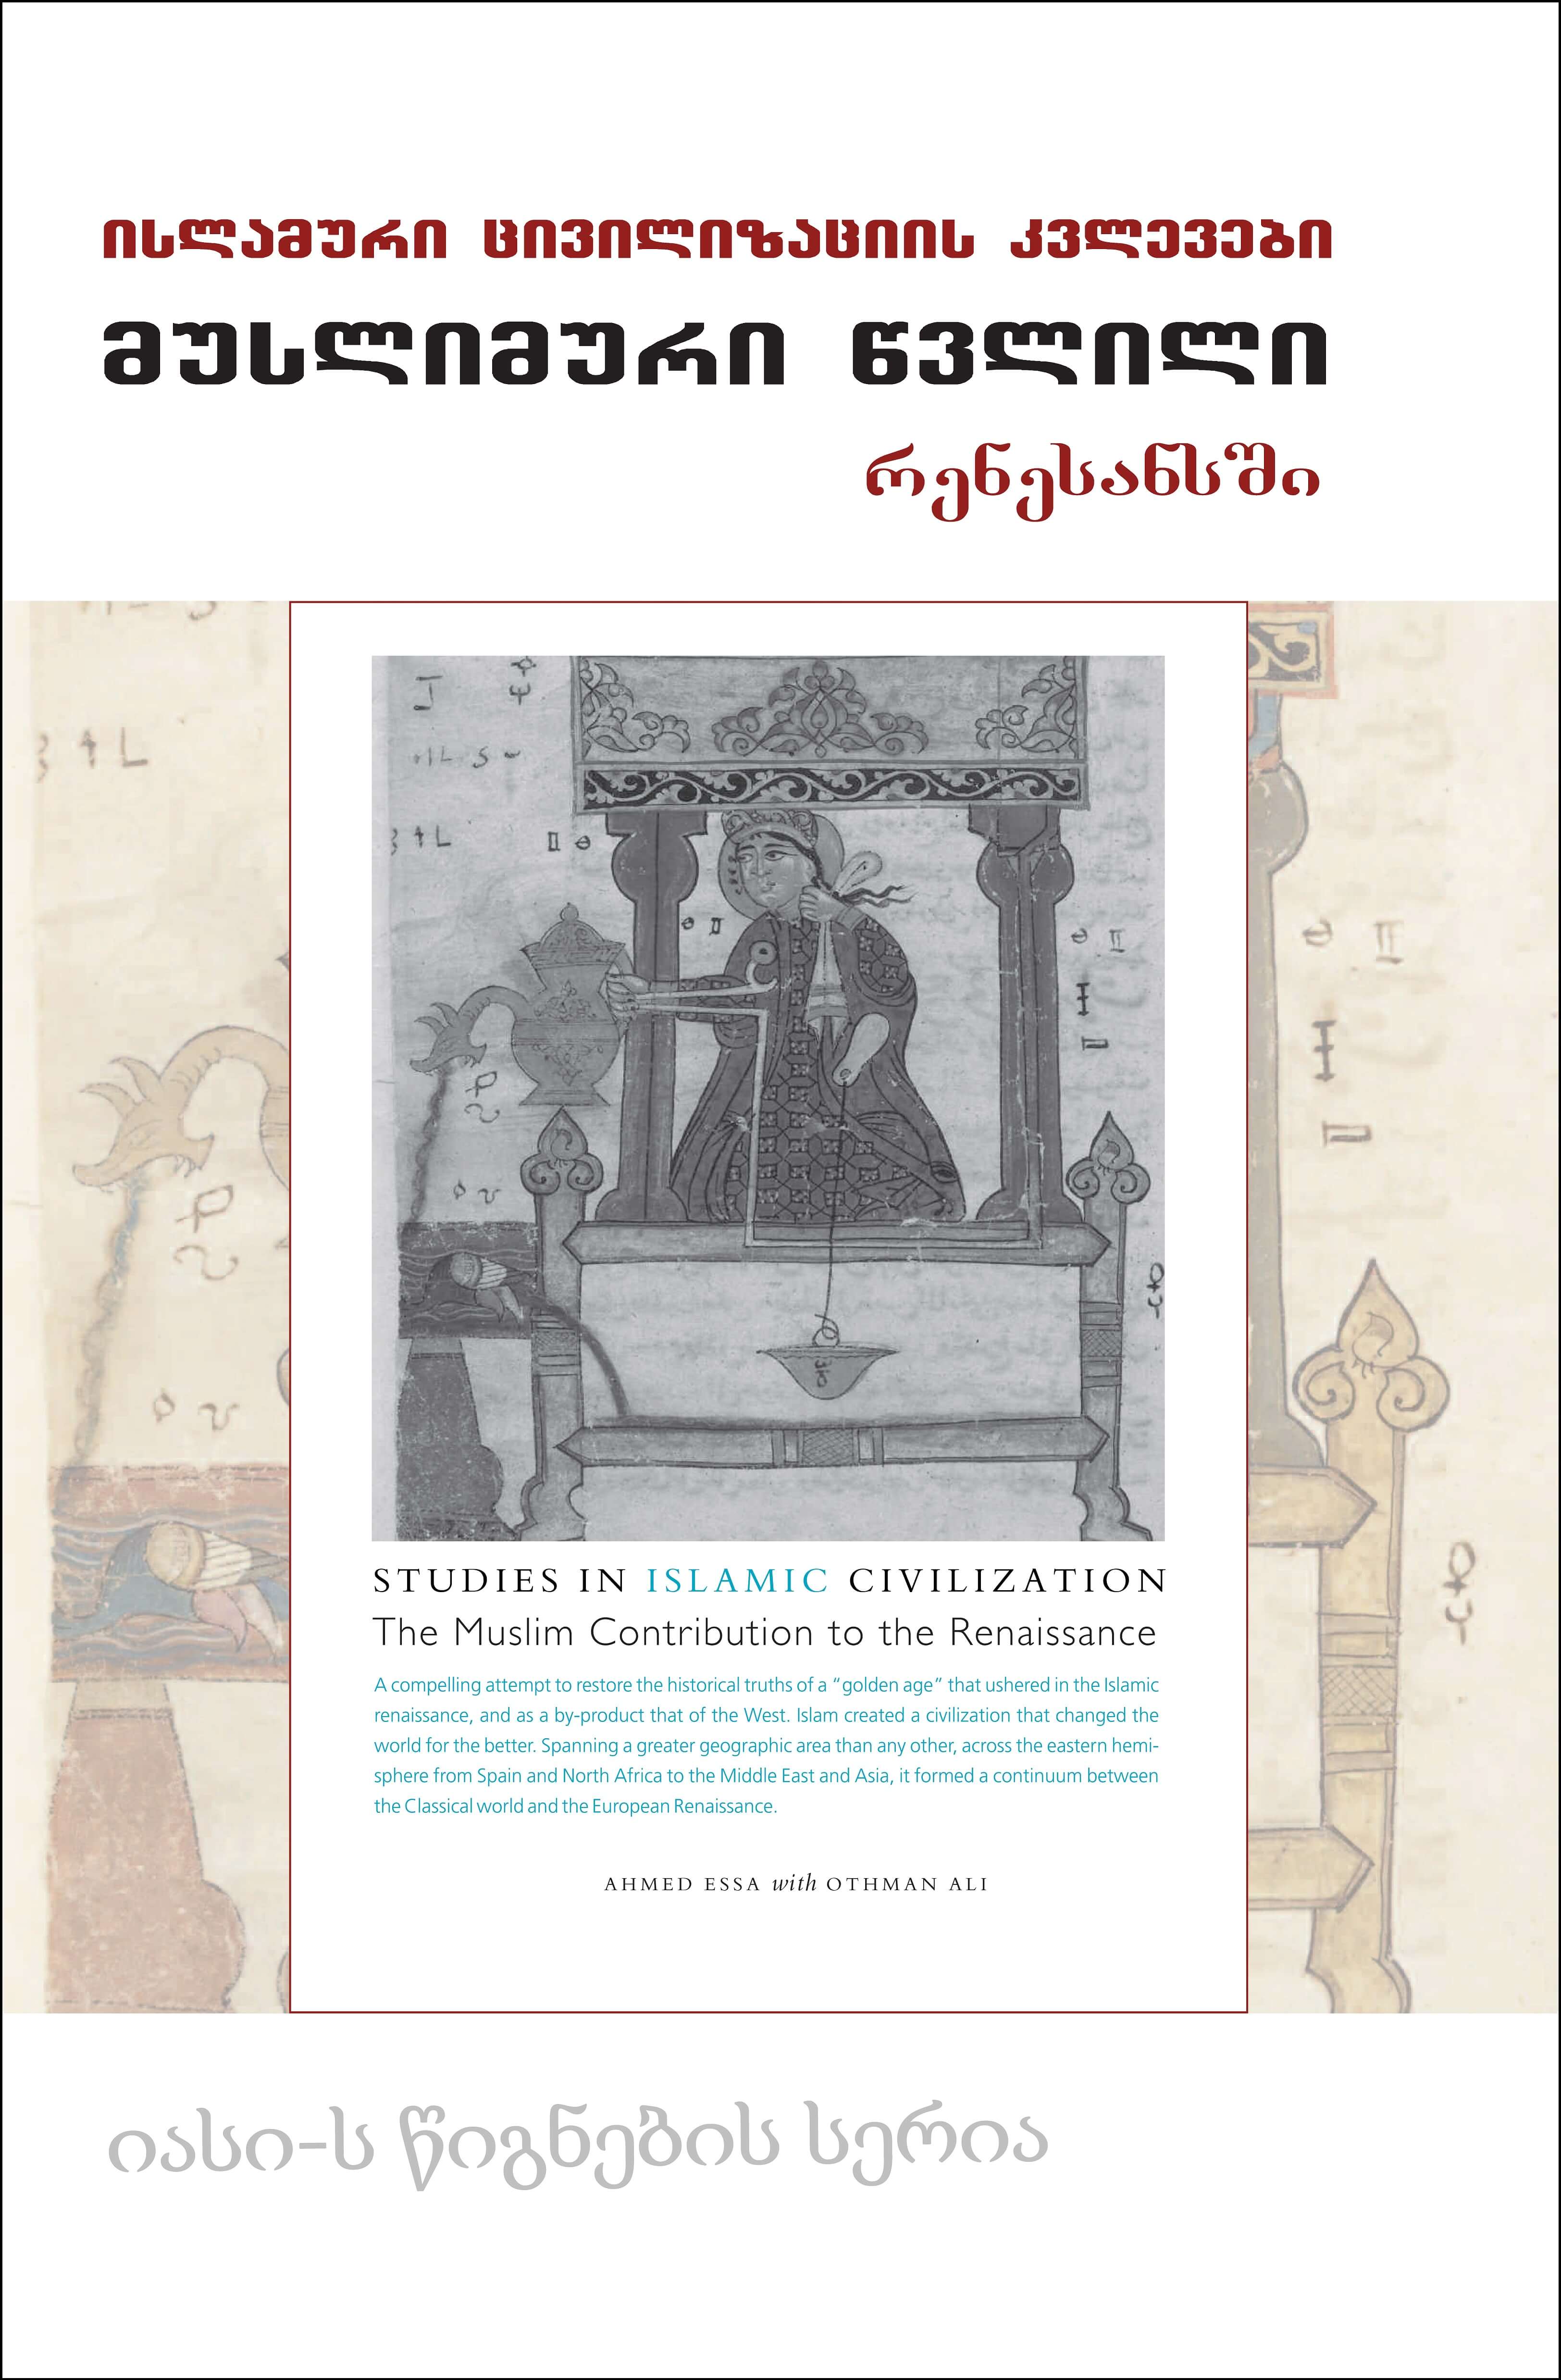 Georgian: islamuri civilizaciis kvlevebi: muslimuri wvlili renesansSi (Book-in-Brief: Studies in Islamic Civilization: The Muslim Contribution to the Renaissance)